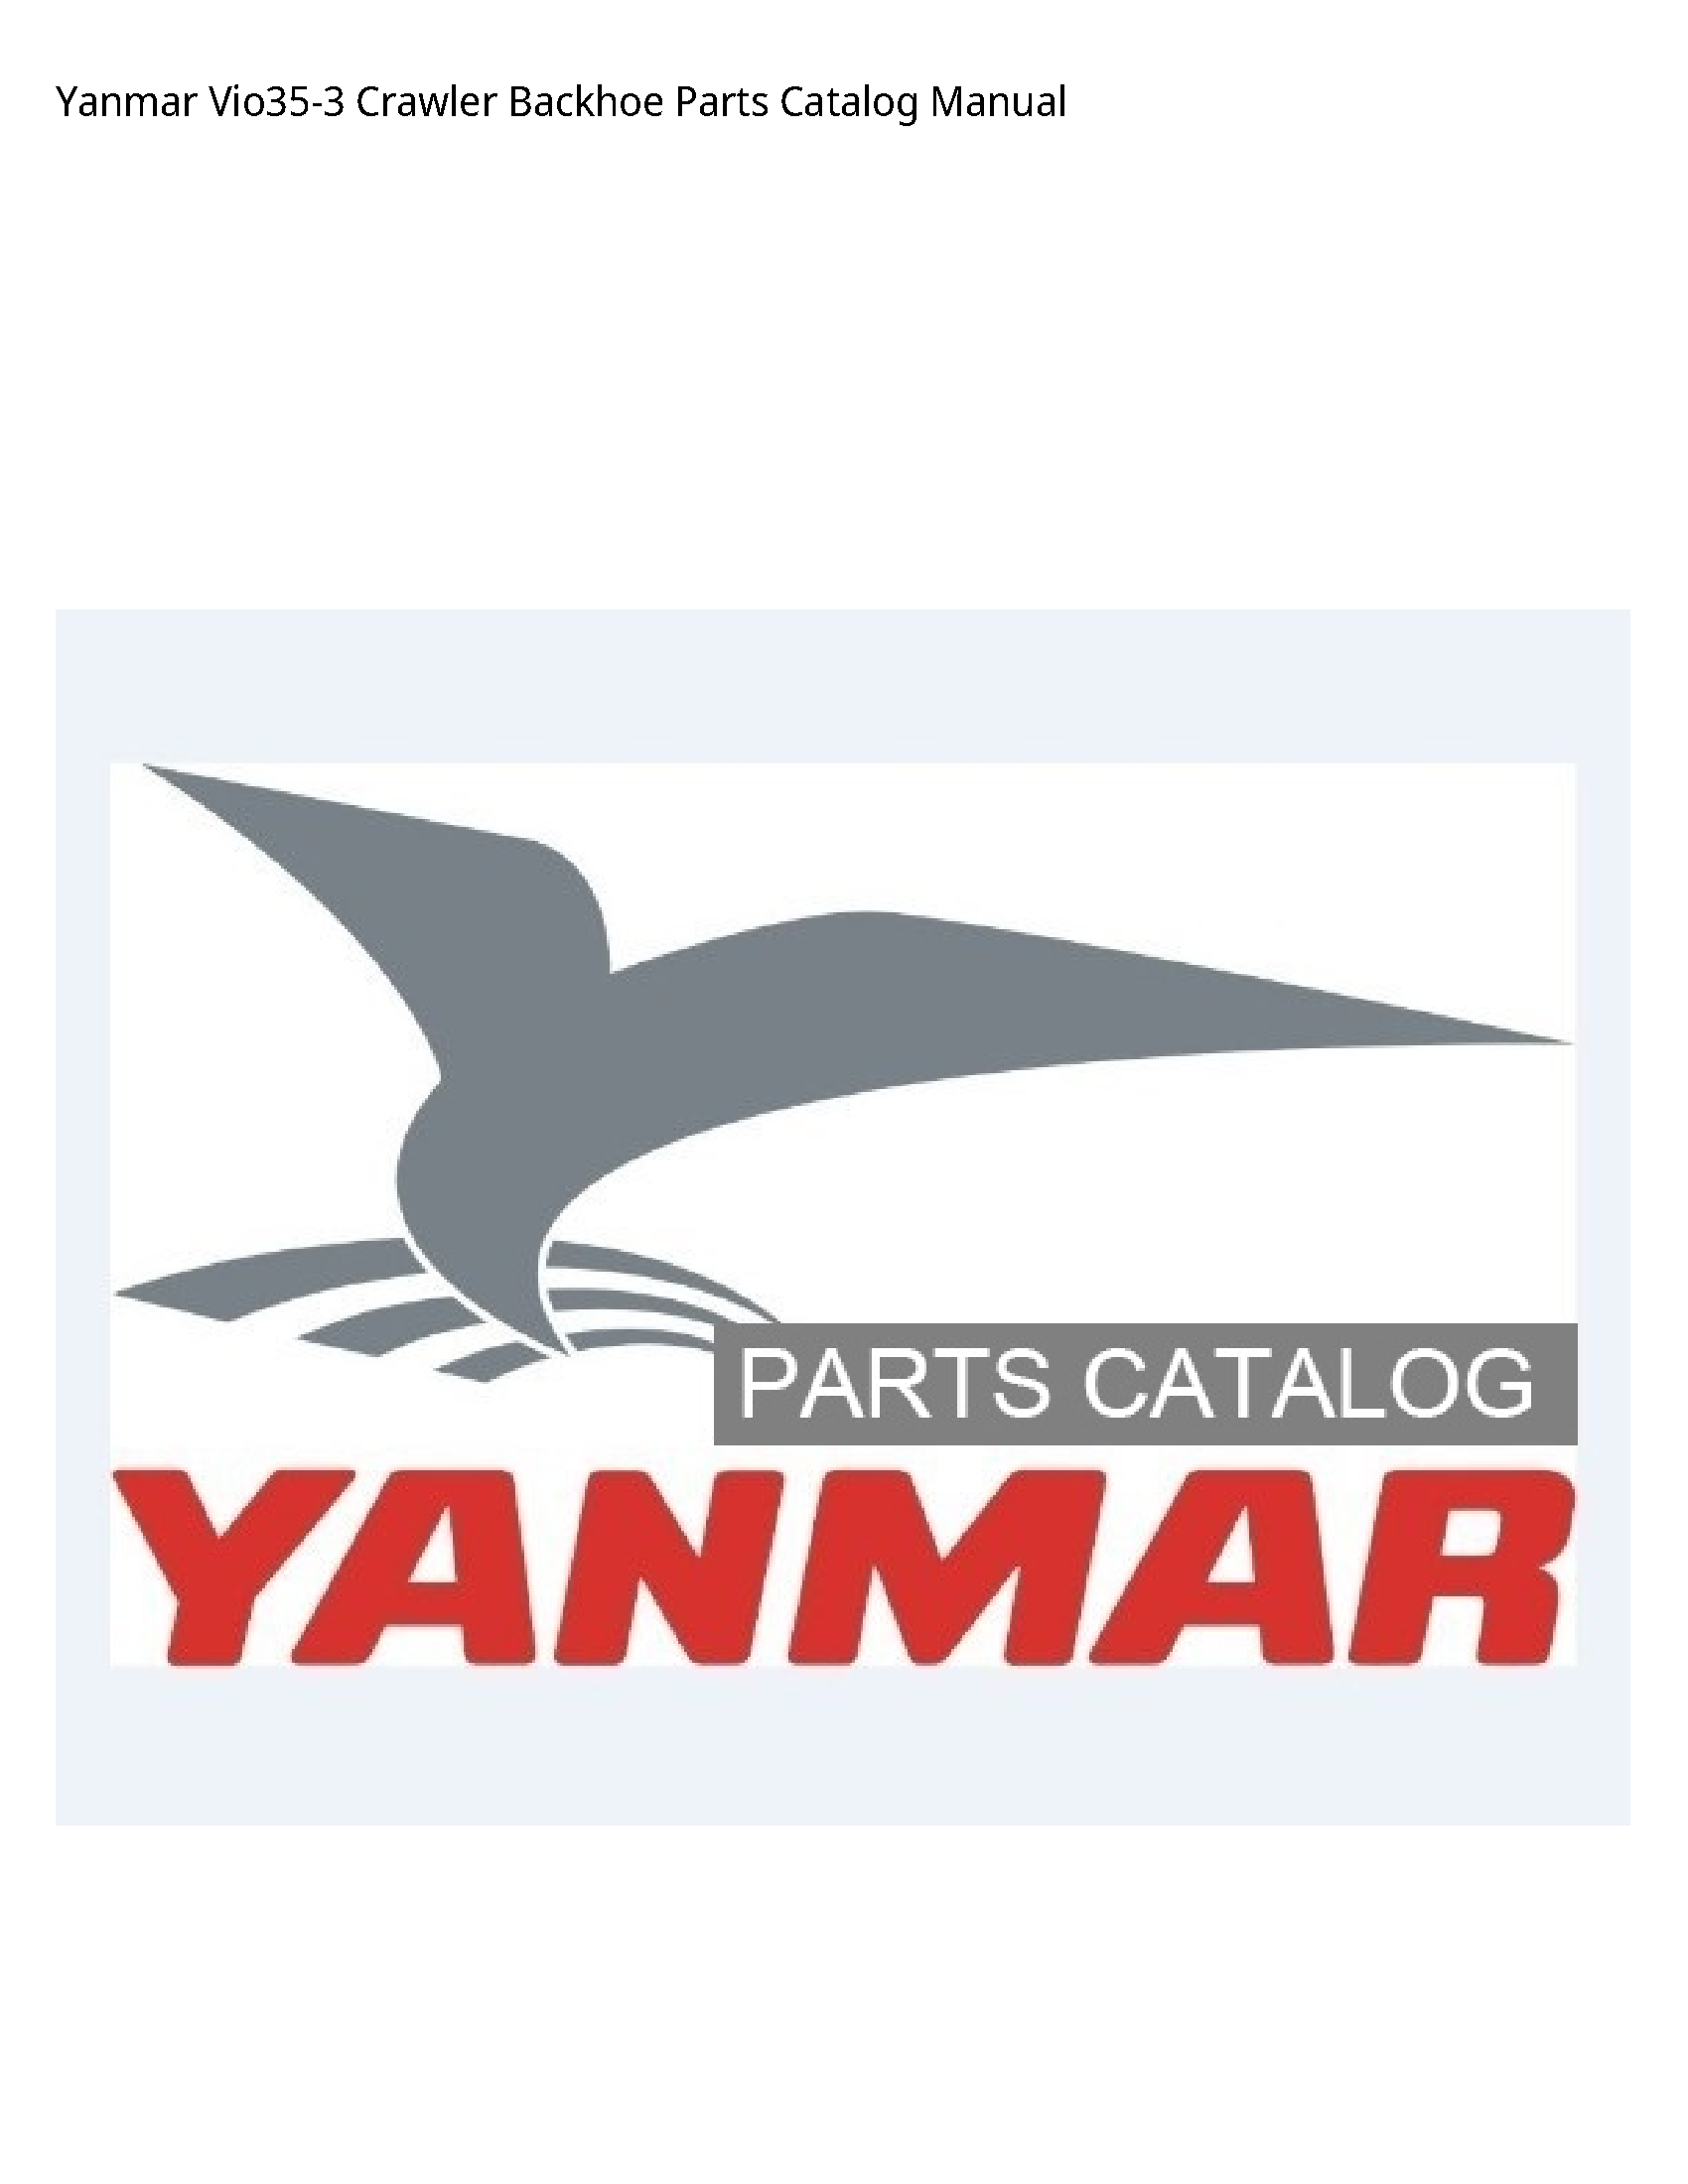 Yanmar Vio35-3 Crawler Backhoe Parts Catalog manual